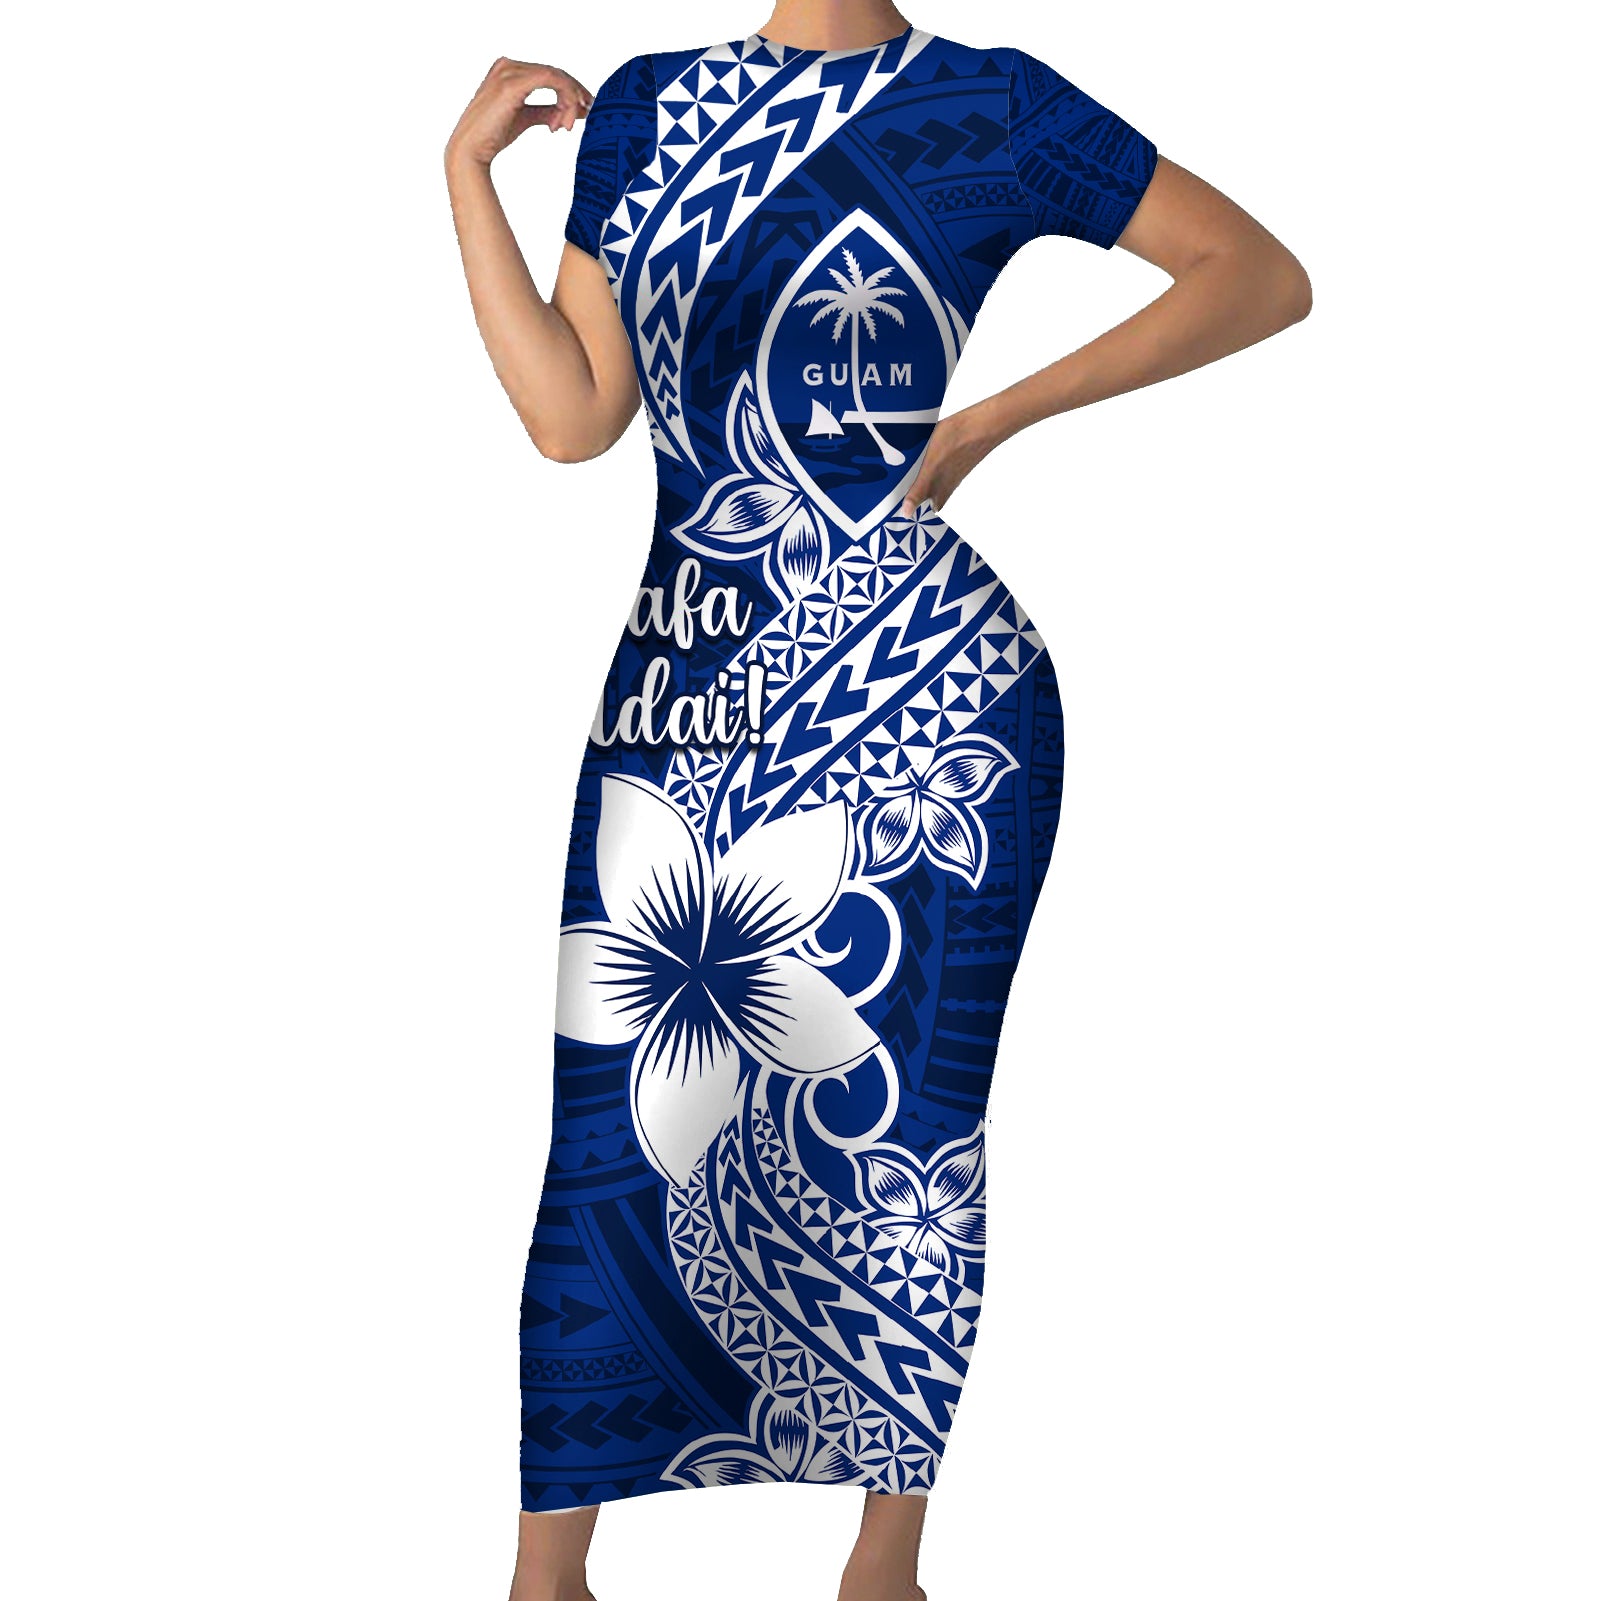 Hafa Adai Guam Short Sleeve Bodycon Dress Polynesian Floral Blue Pattern LT01 Long Dress Blue - Polynesian Pride